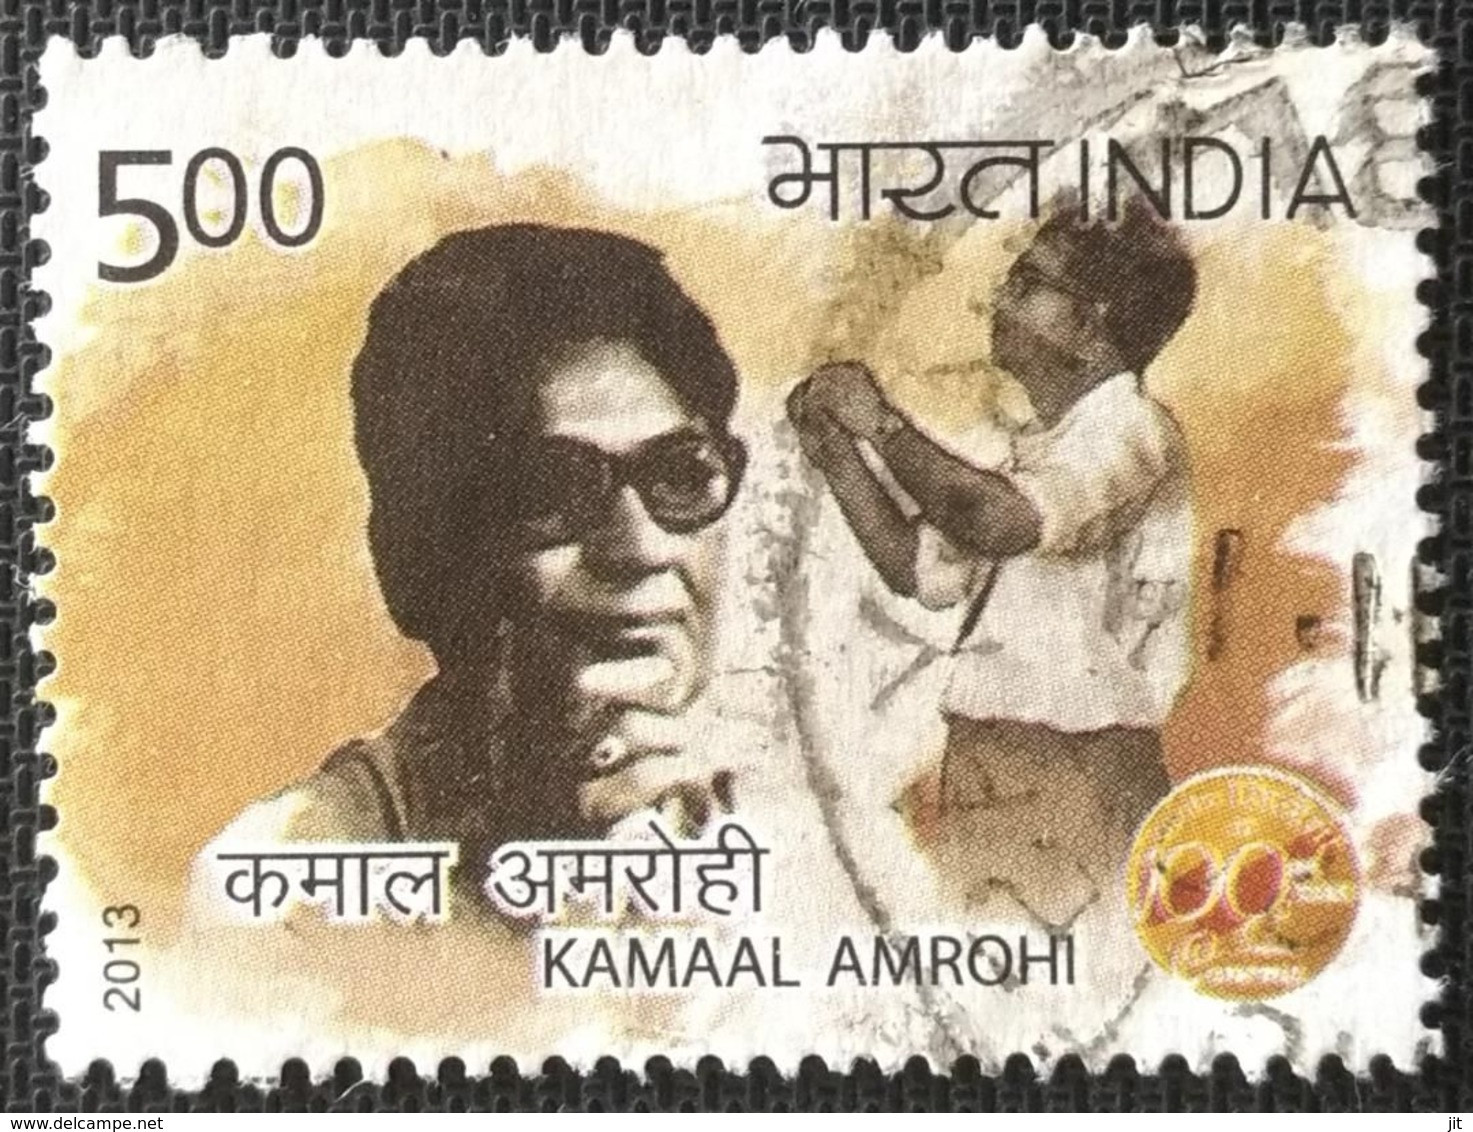 022. INDIA 2013 USED STAMP 100 YEARS OF INDIAN CINEMA (KAMAAL AMROHI) - Gebruikt